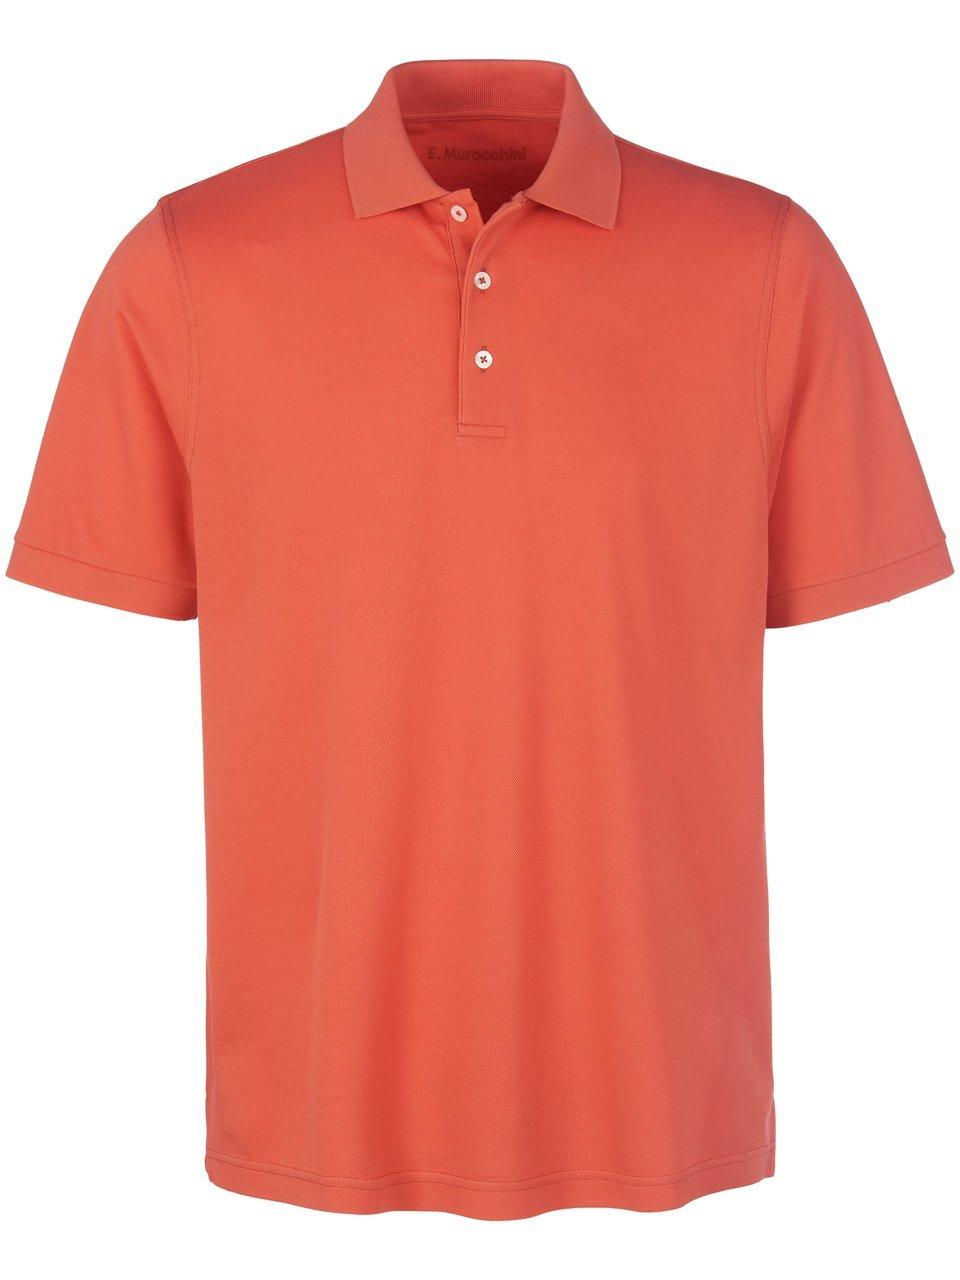 e.muracchini - Polo-Shirt  orange